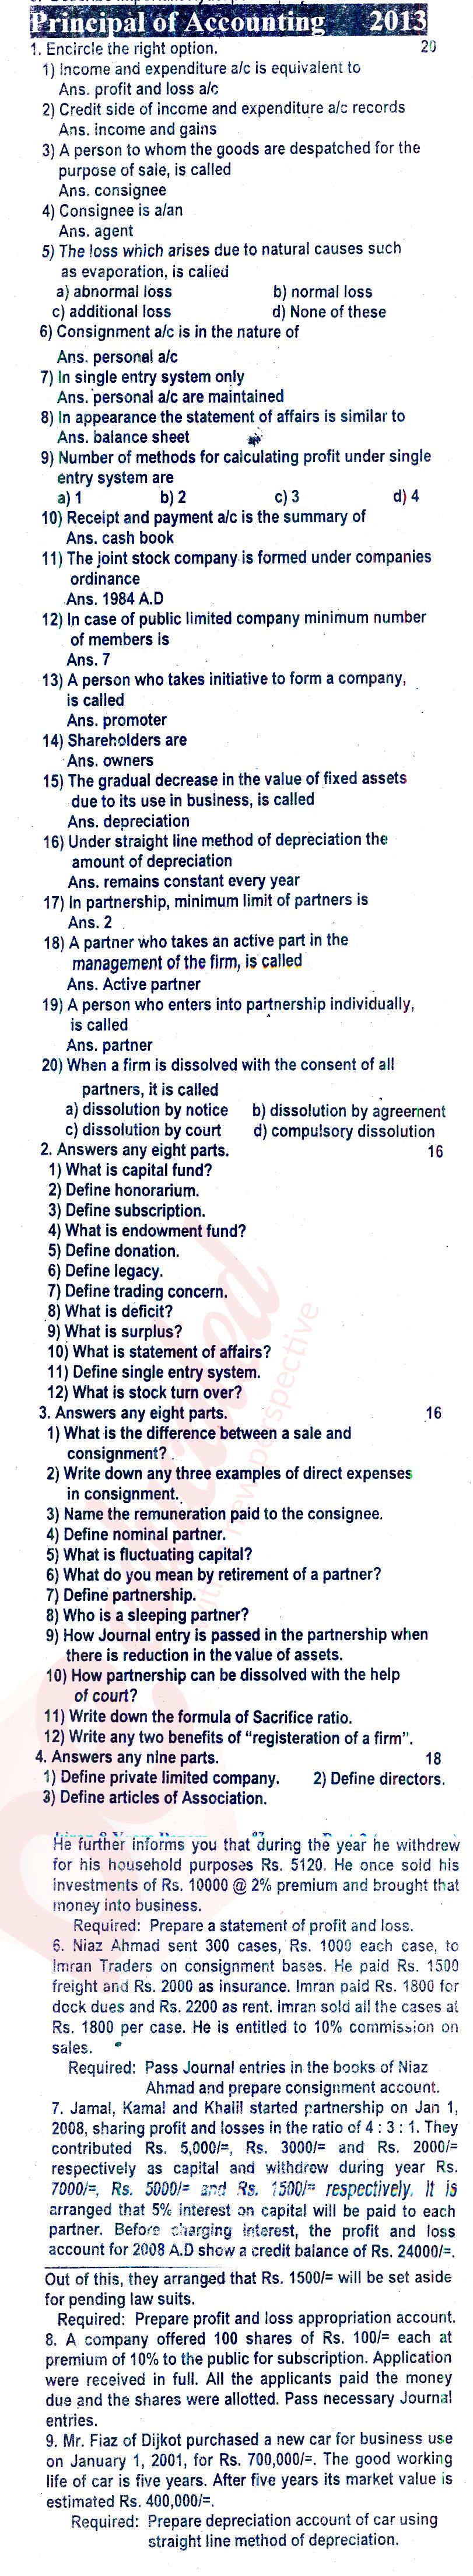 Principles of Accounting ICOM Part 2 Past Paper Group 1 BISE Rawalpindi 2013